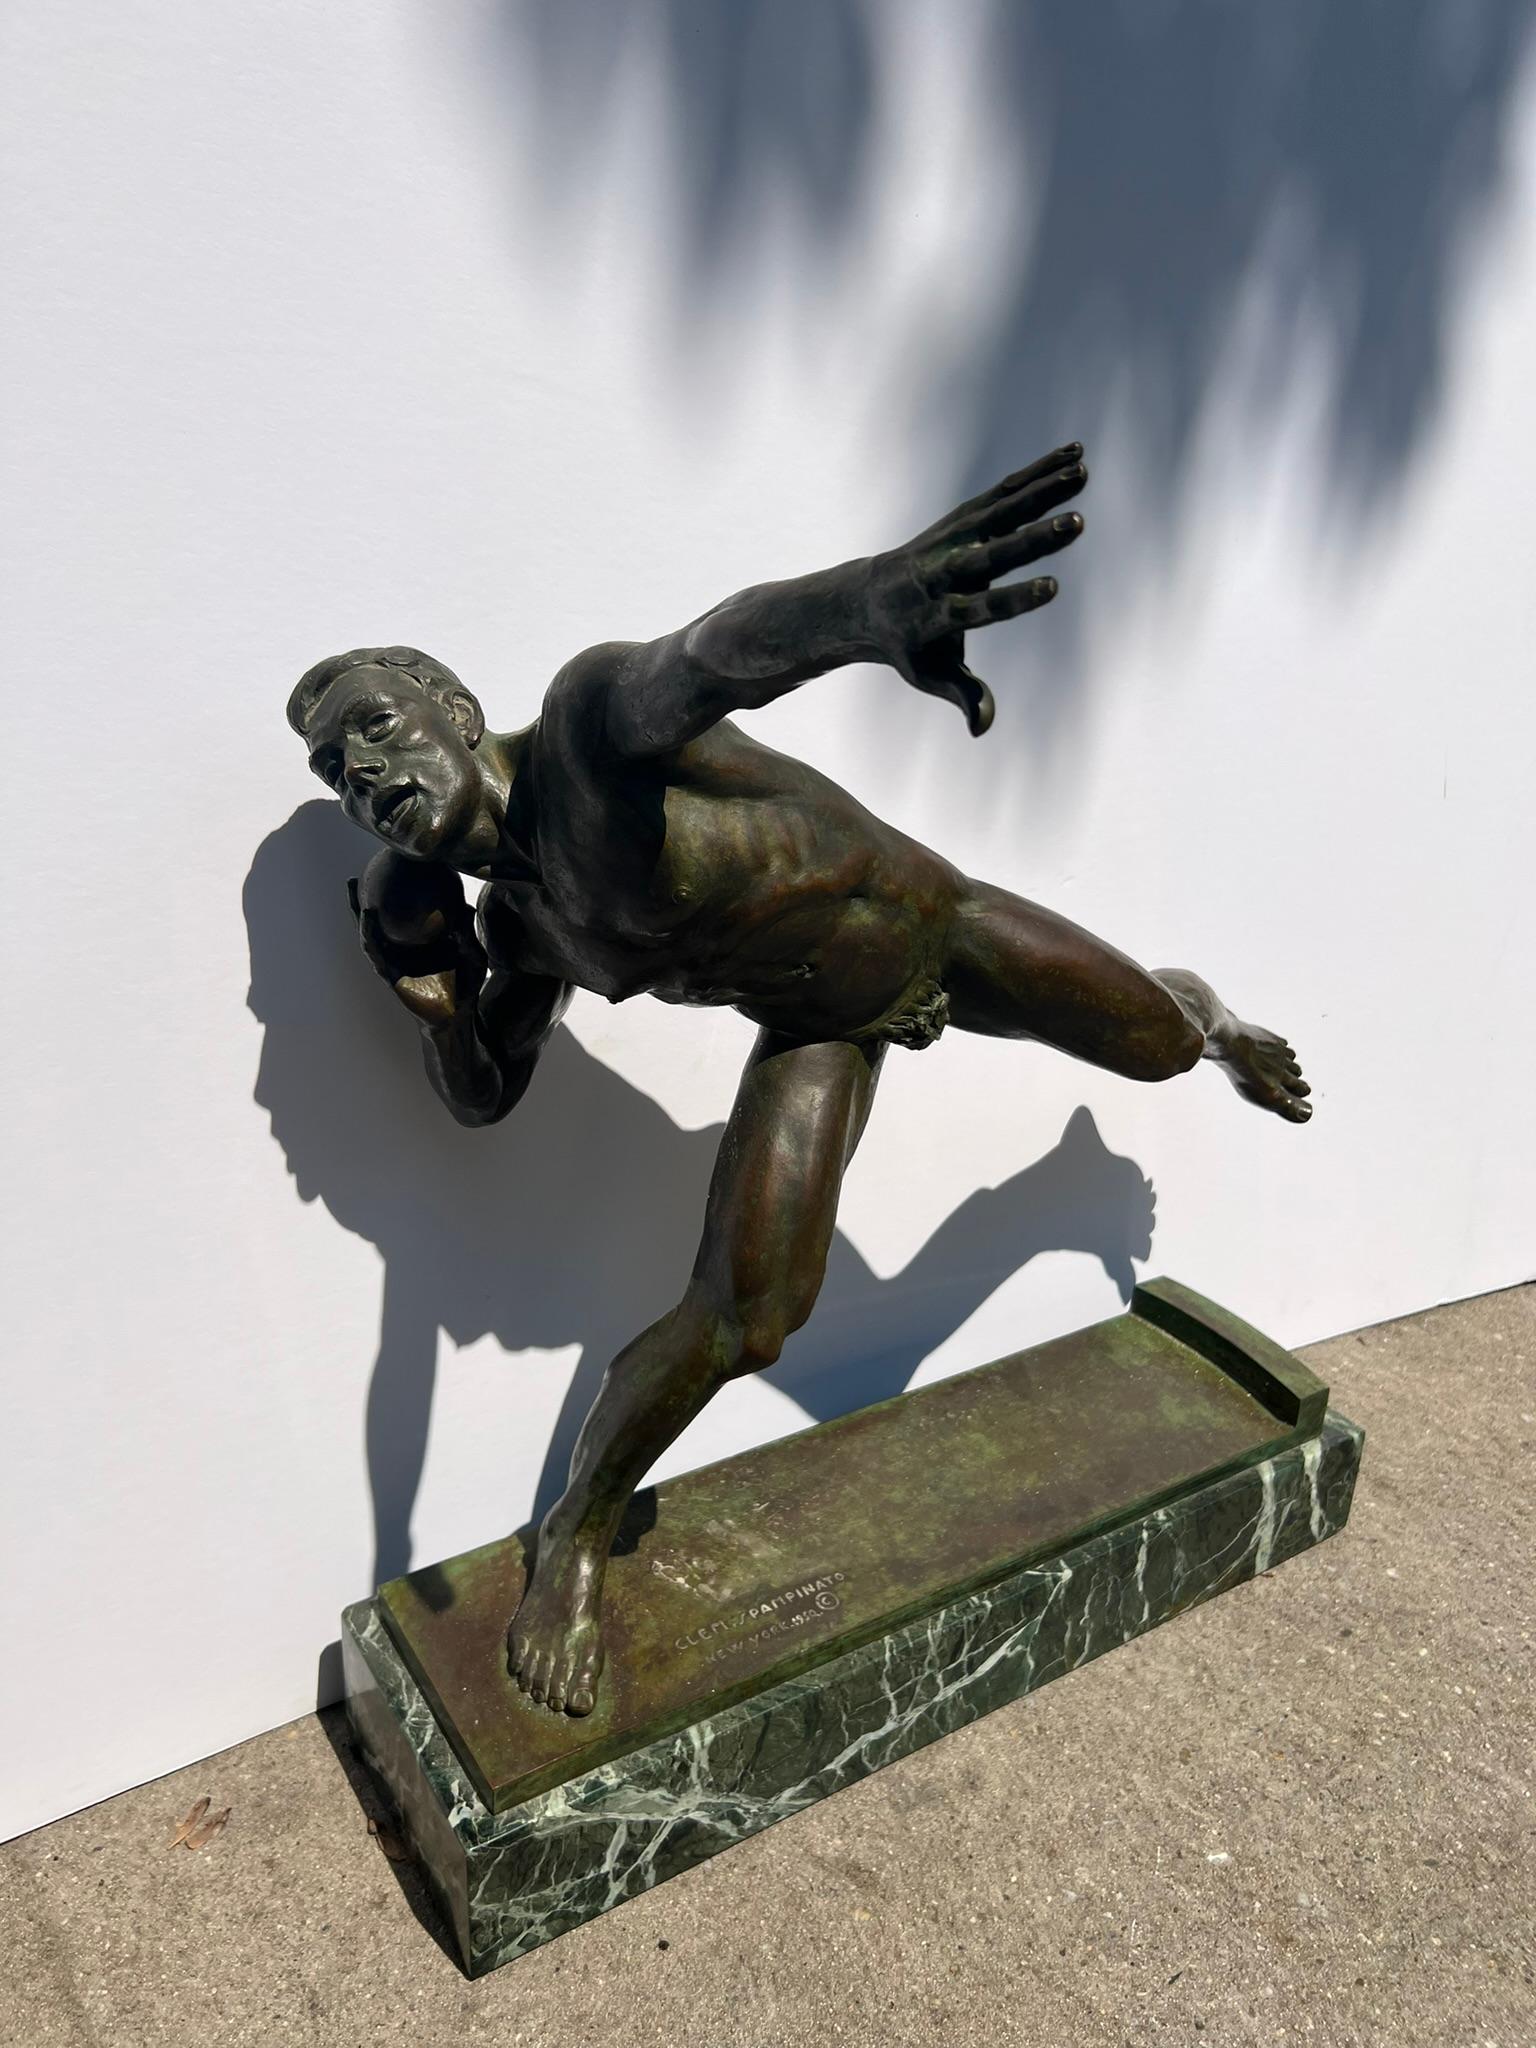 Figurative Sculpture Clemente Spampinato - Sculpture américaine d'athlète masculin nu pendant le tournage